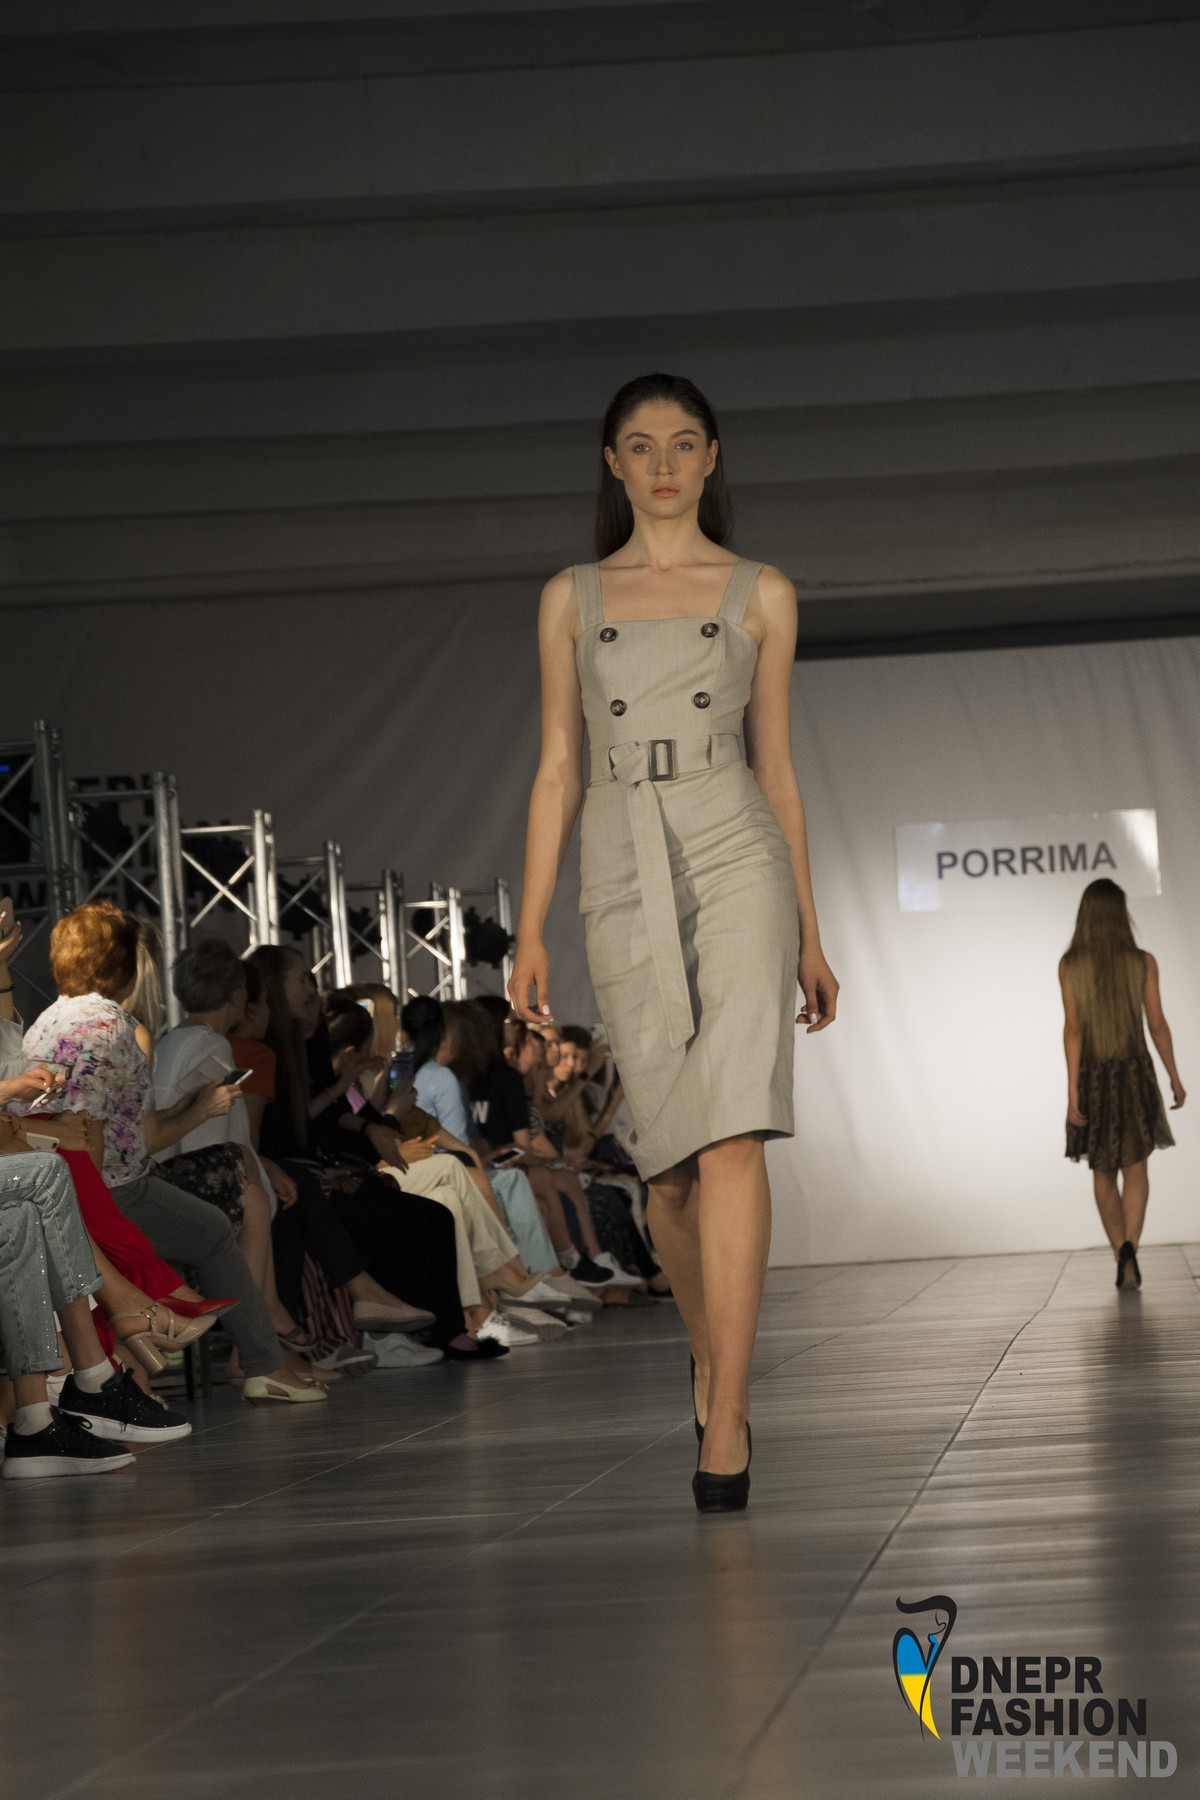 Хроники Dnepr Fashion Weekend как прошли три дня модного мероприятия - Porrima